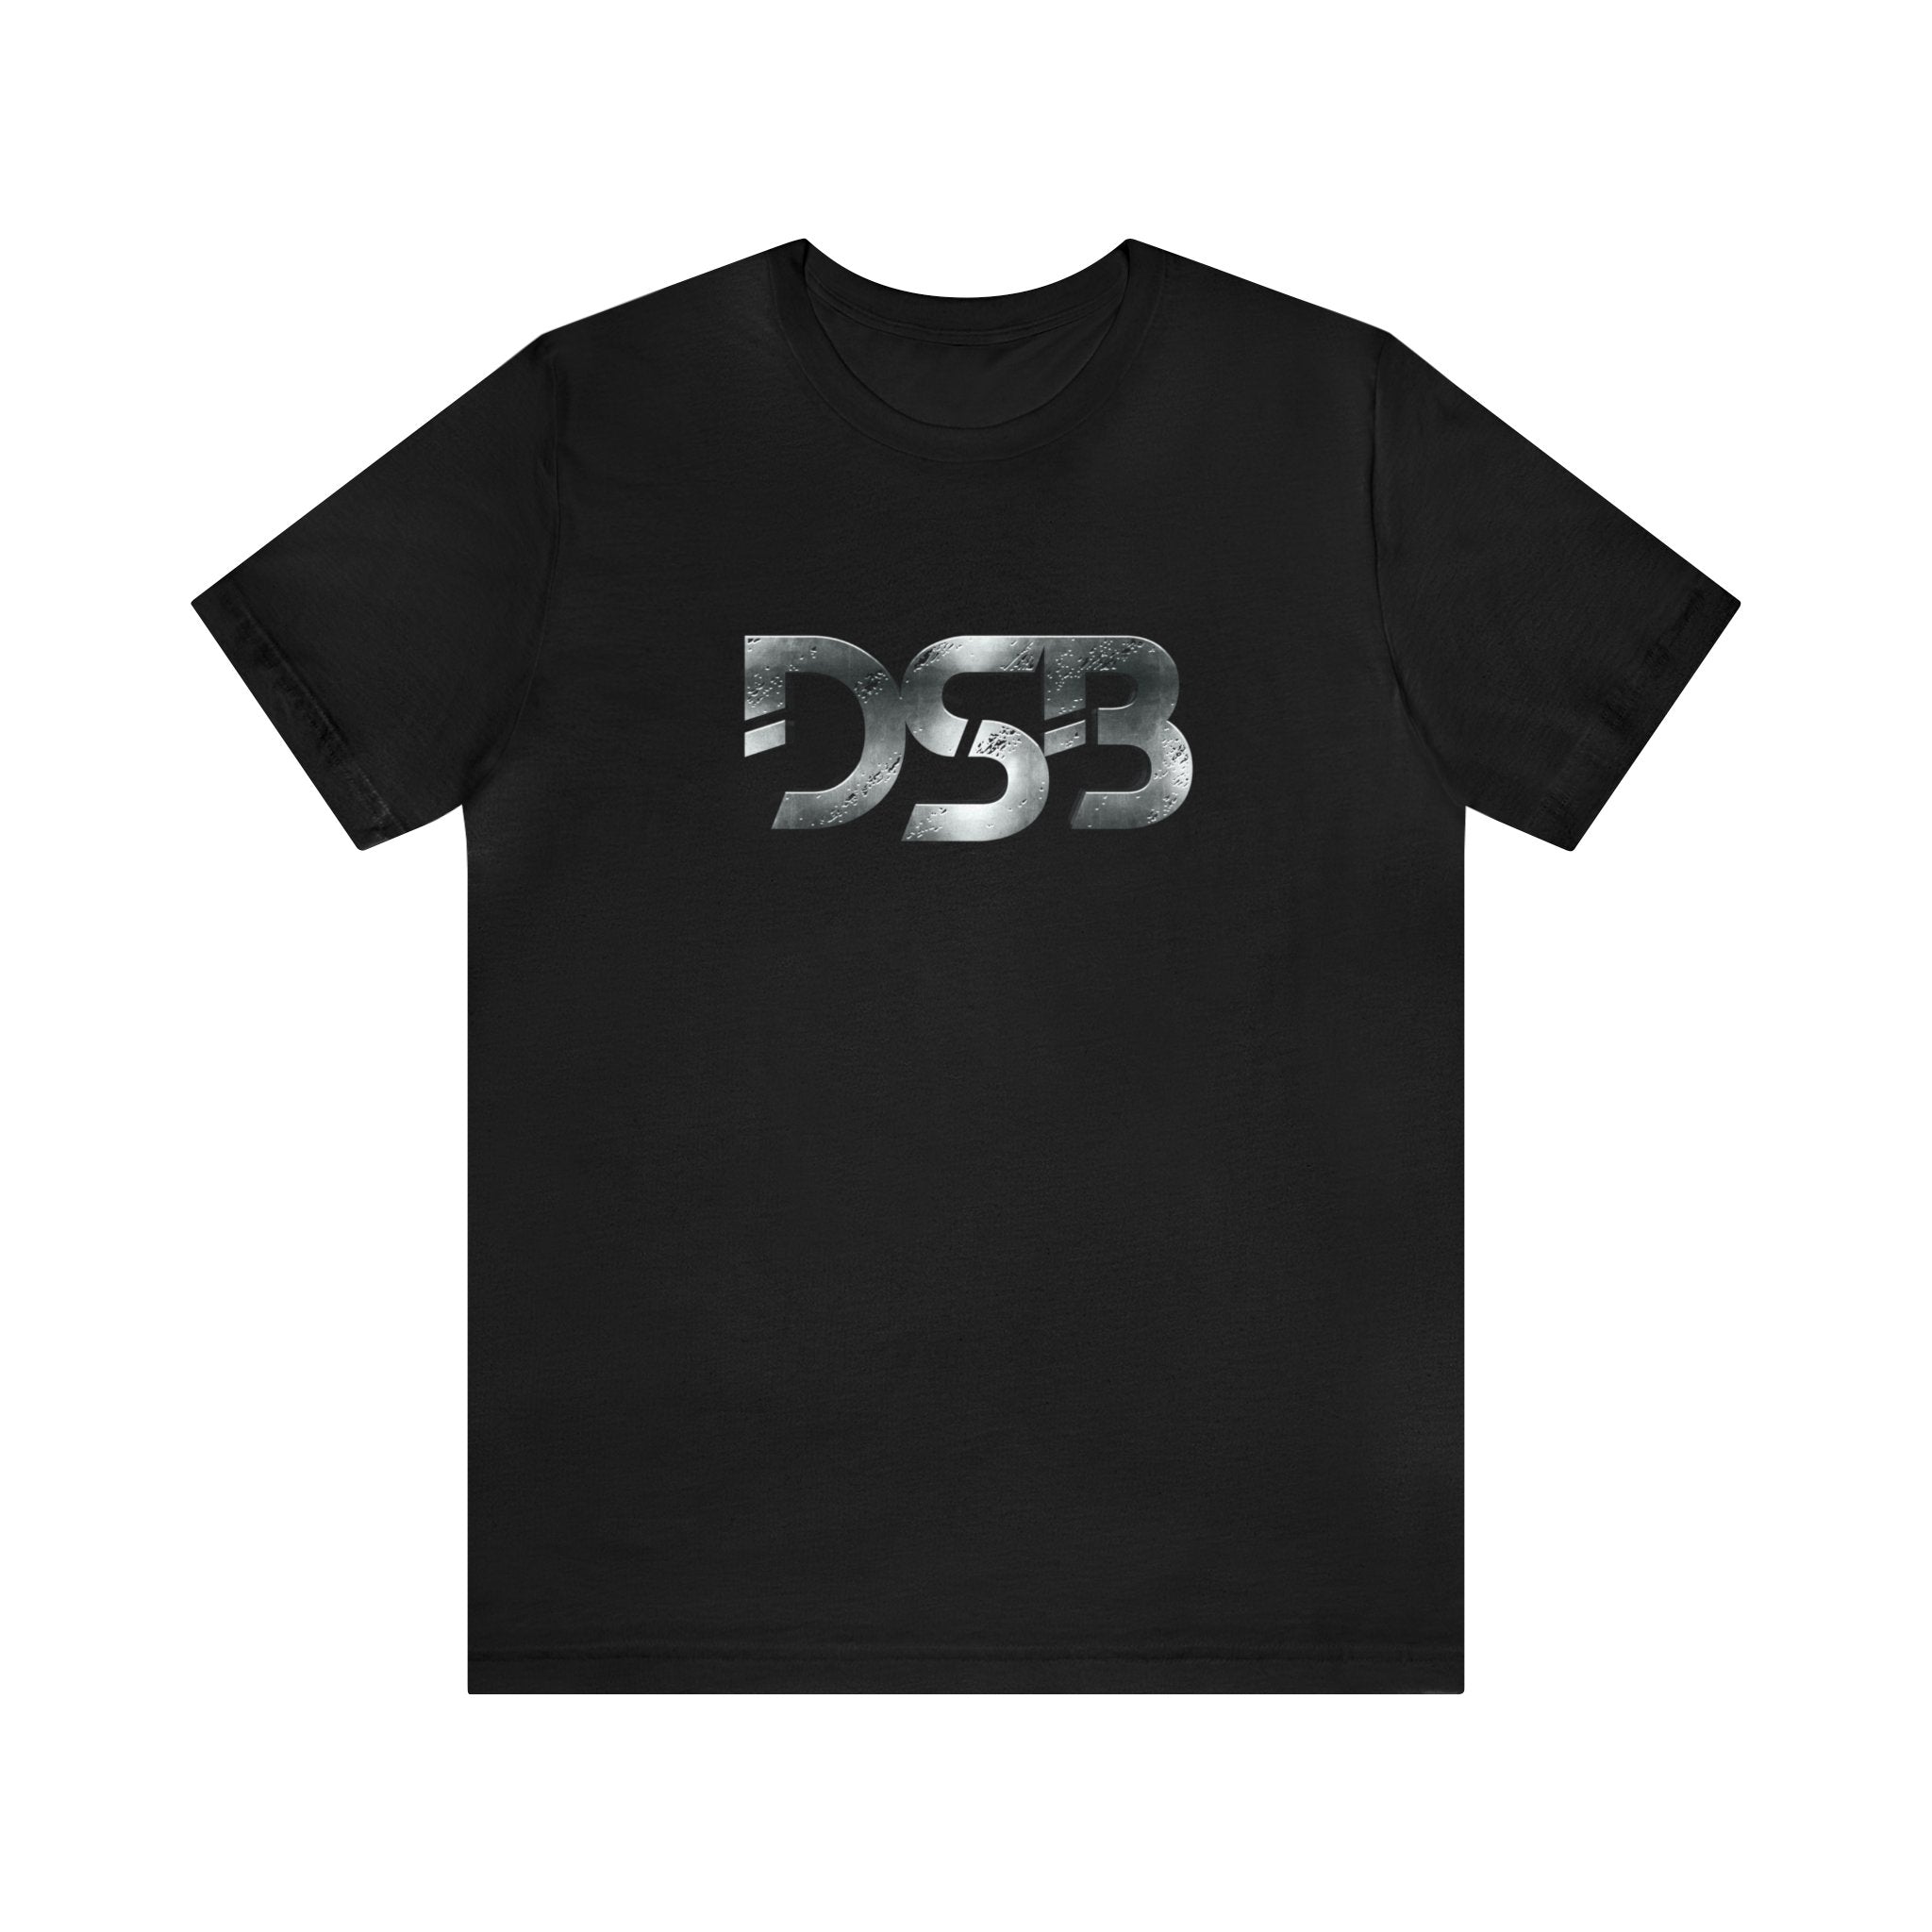 DSB Steel Logo T-Shirt